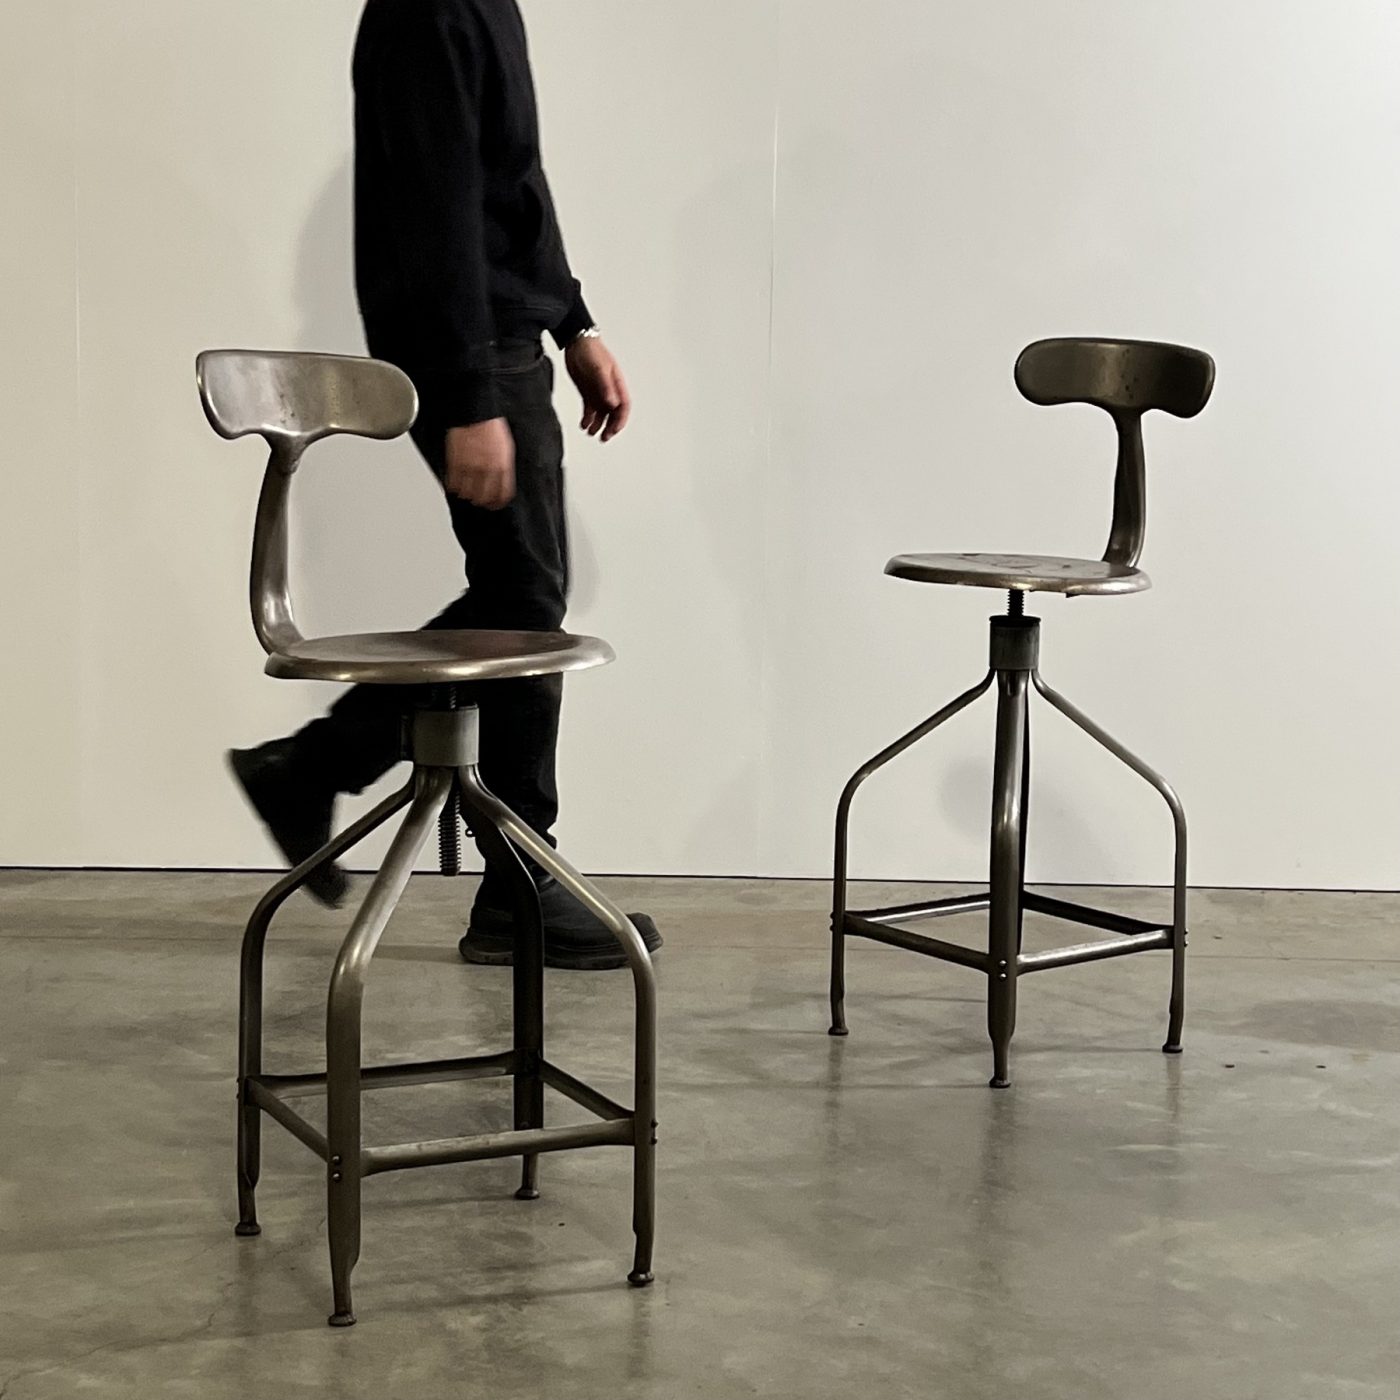 objet-vagabond-nicole-chairs0003